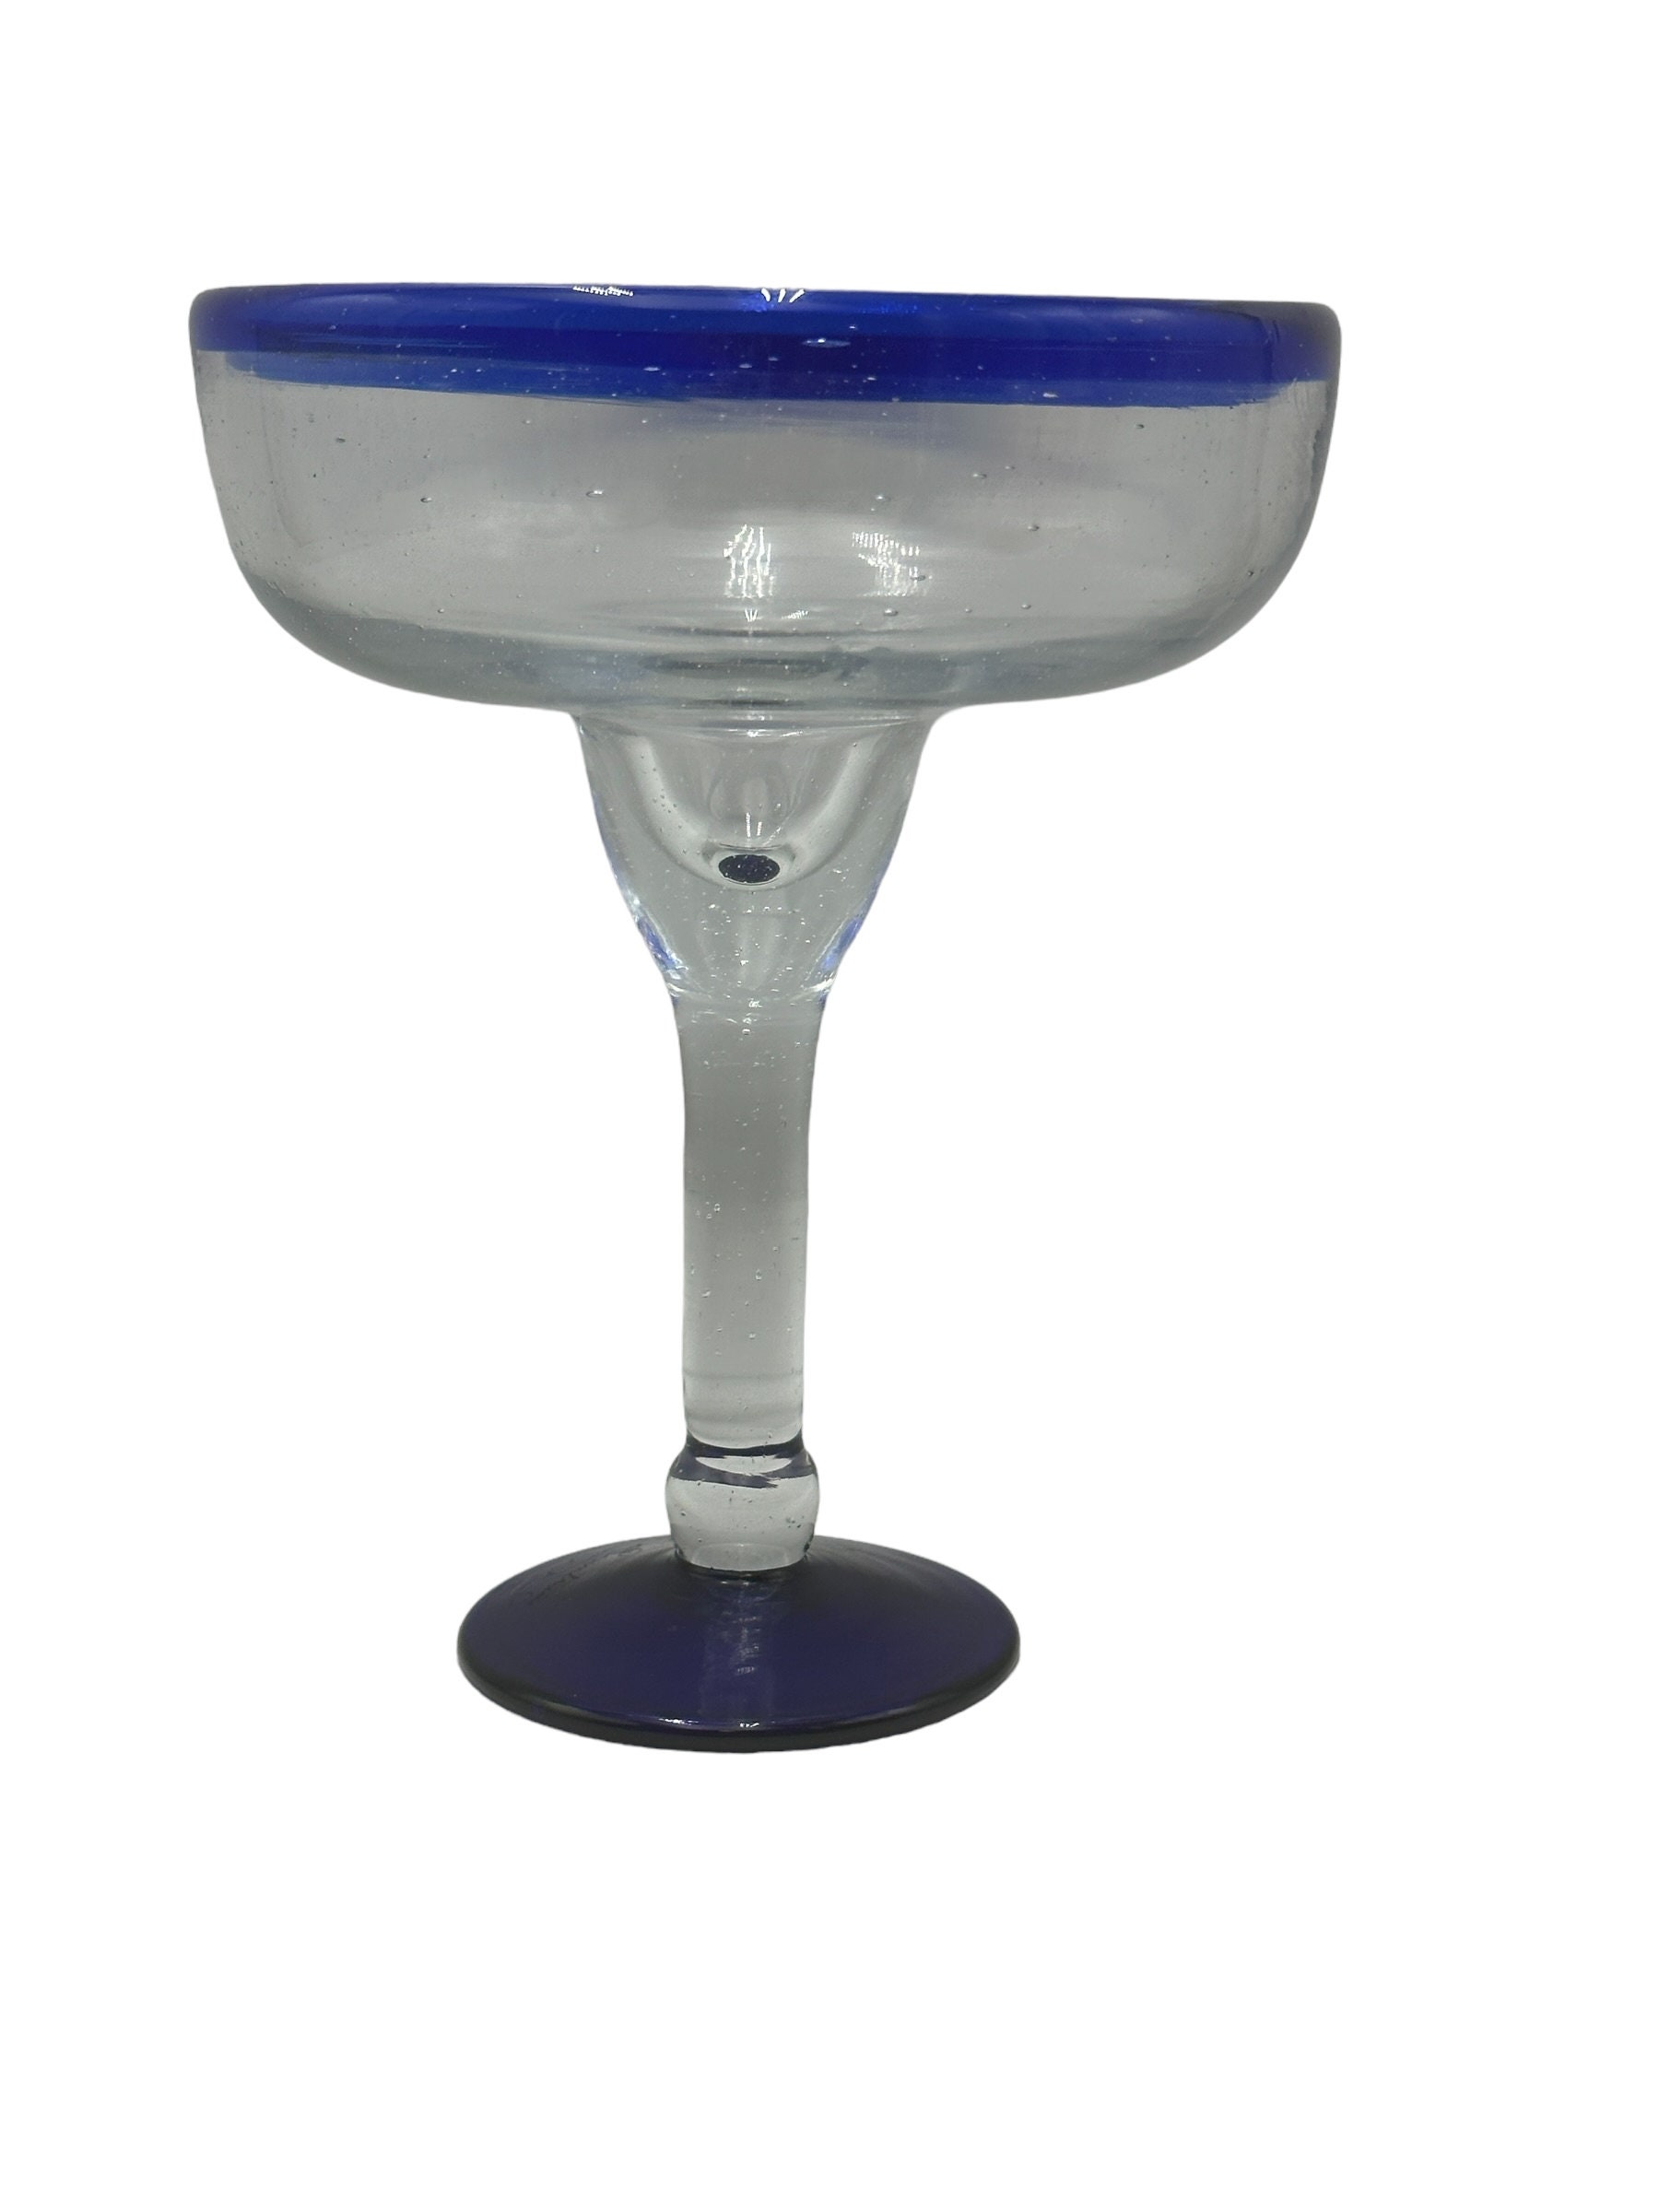 JUMBO HUGE DRINK CUPS - MARTINI CUP, MARGARITA BOWL, WINE GLASS or  CHAMPAGNE FLUTE (3 Huge Sizes) Jumbo - Giant - Large